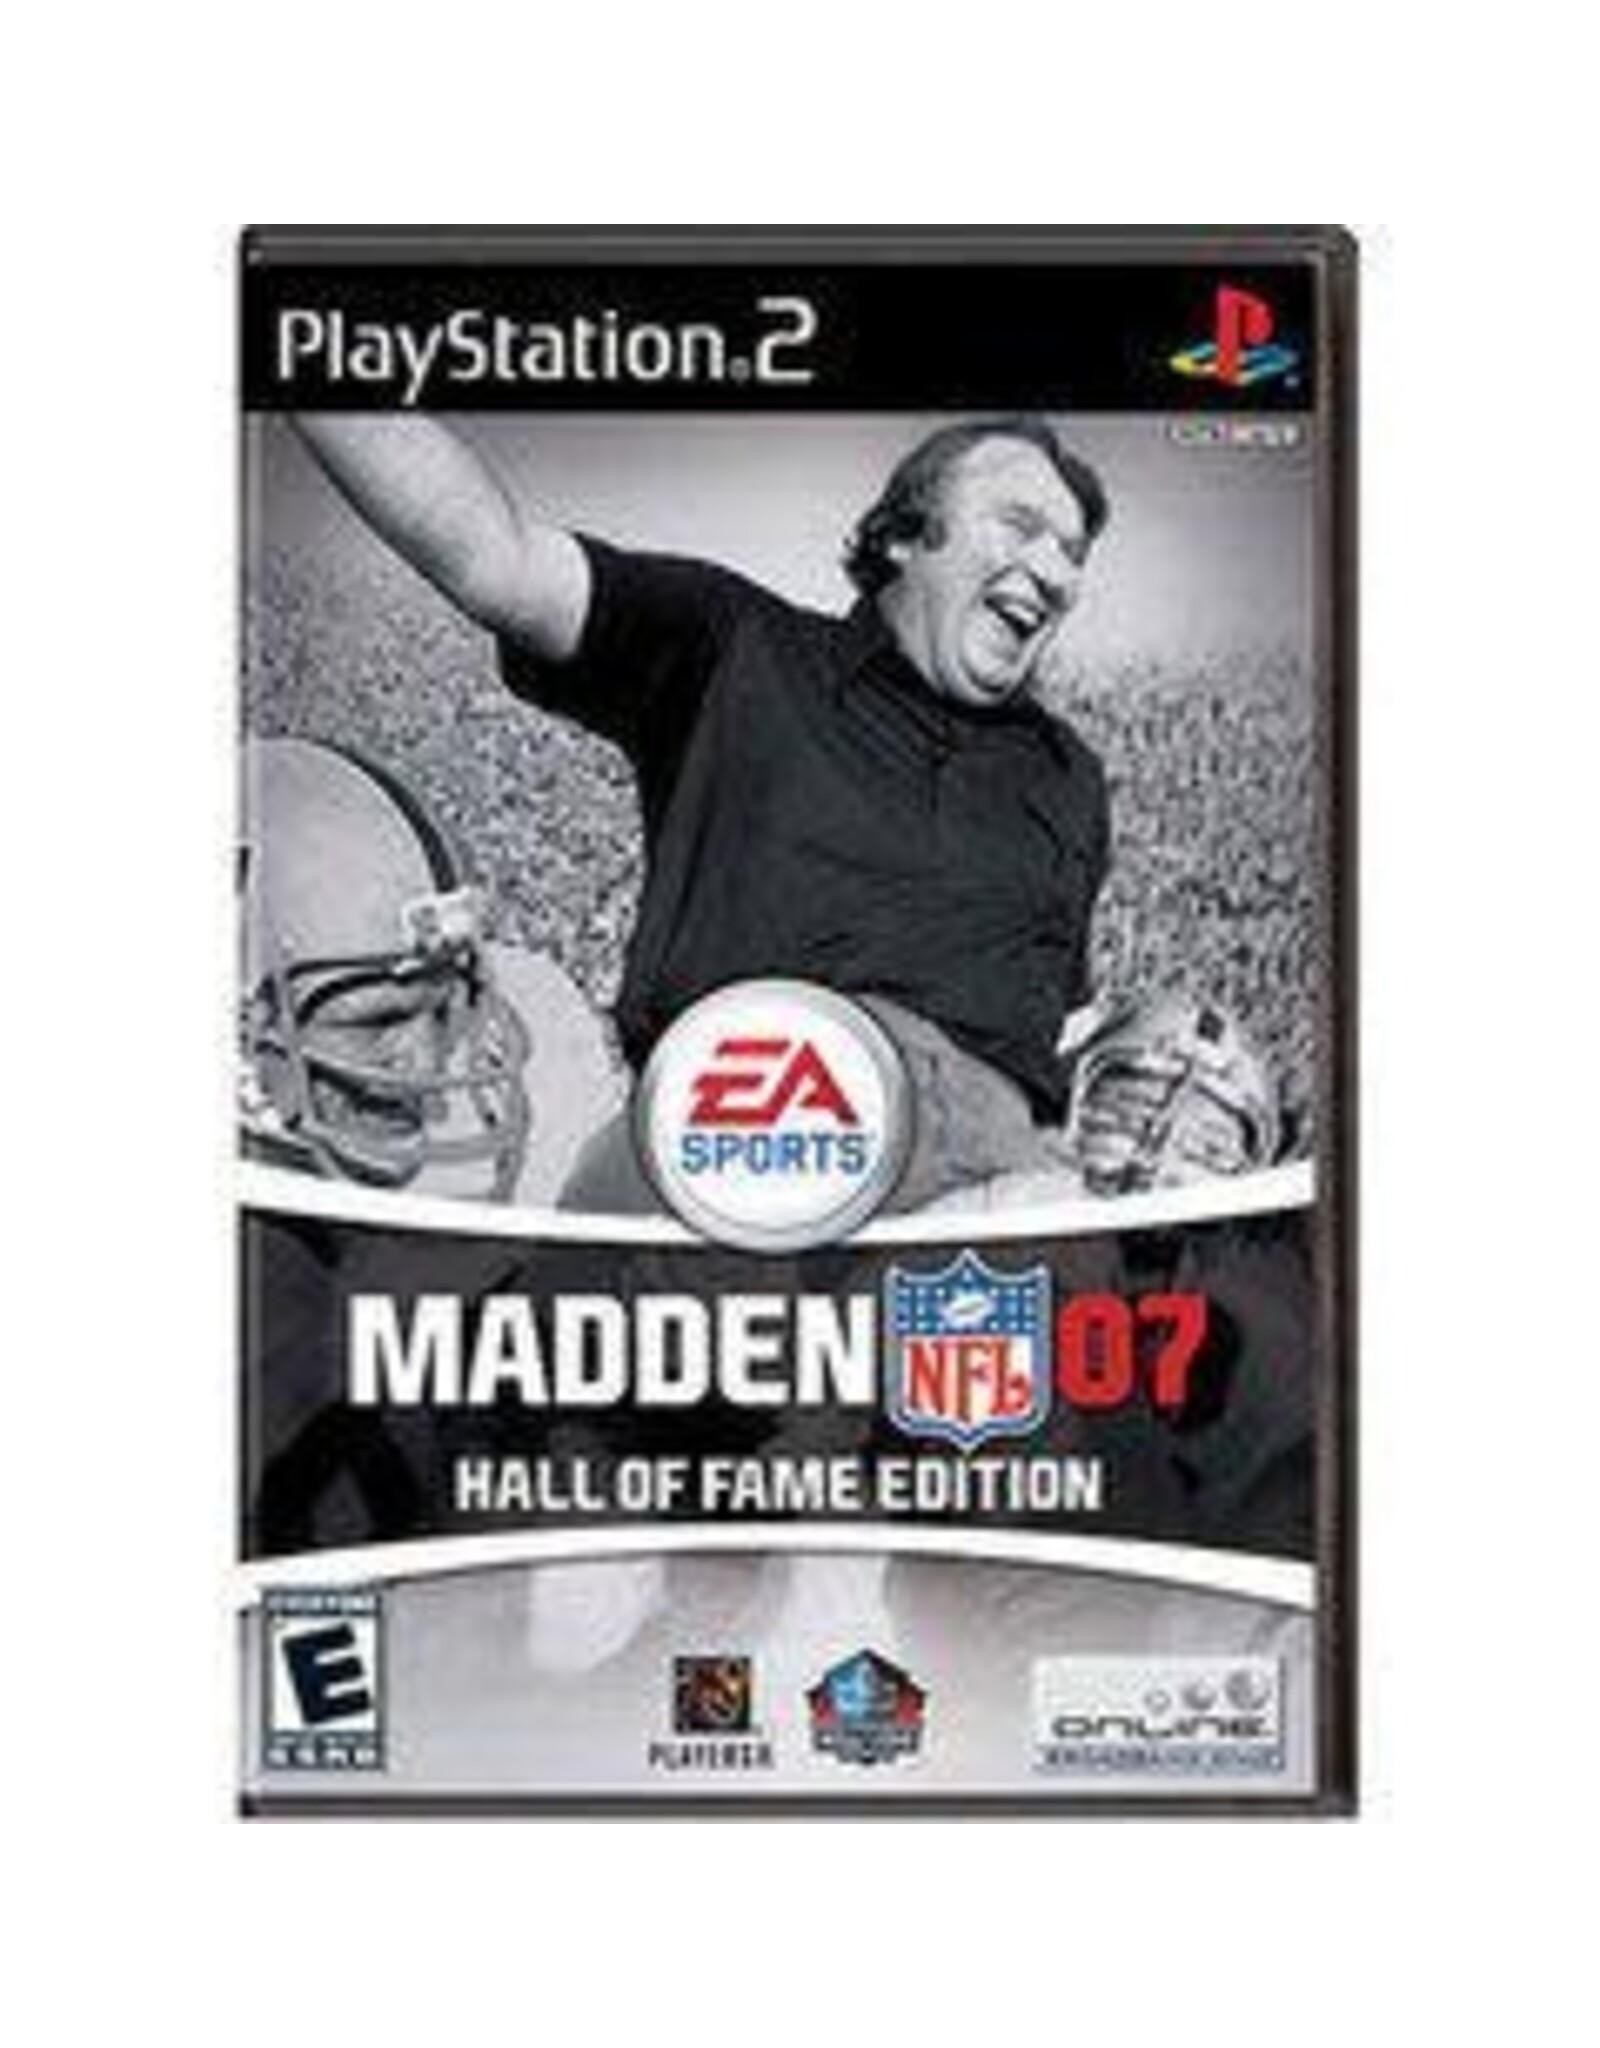 Playstation 2 Madden 2007 Hall of Fame Edition (CiB) - Video Game Trader